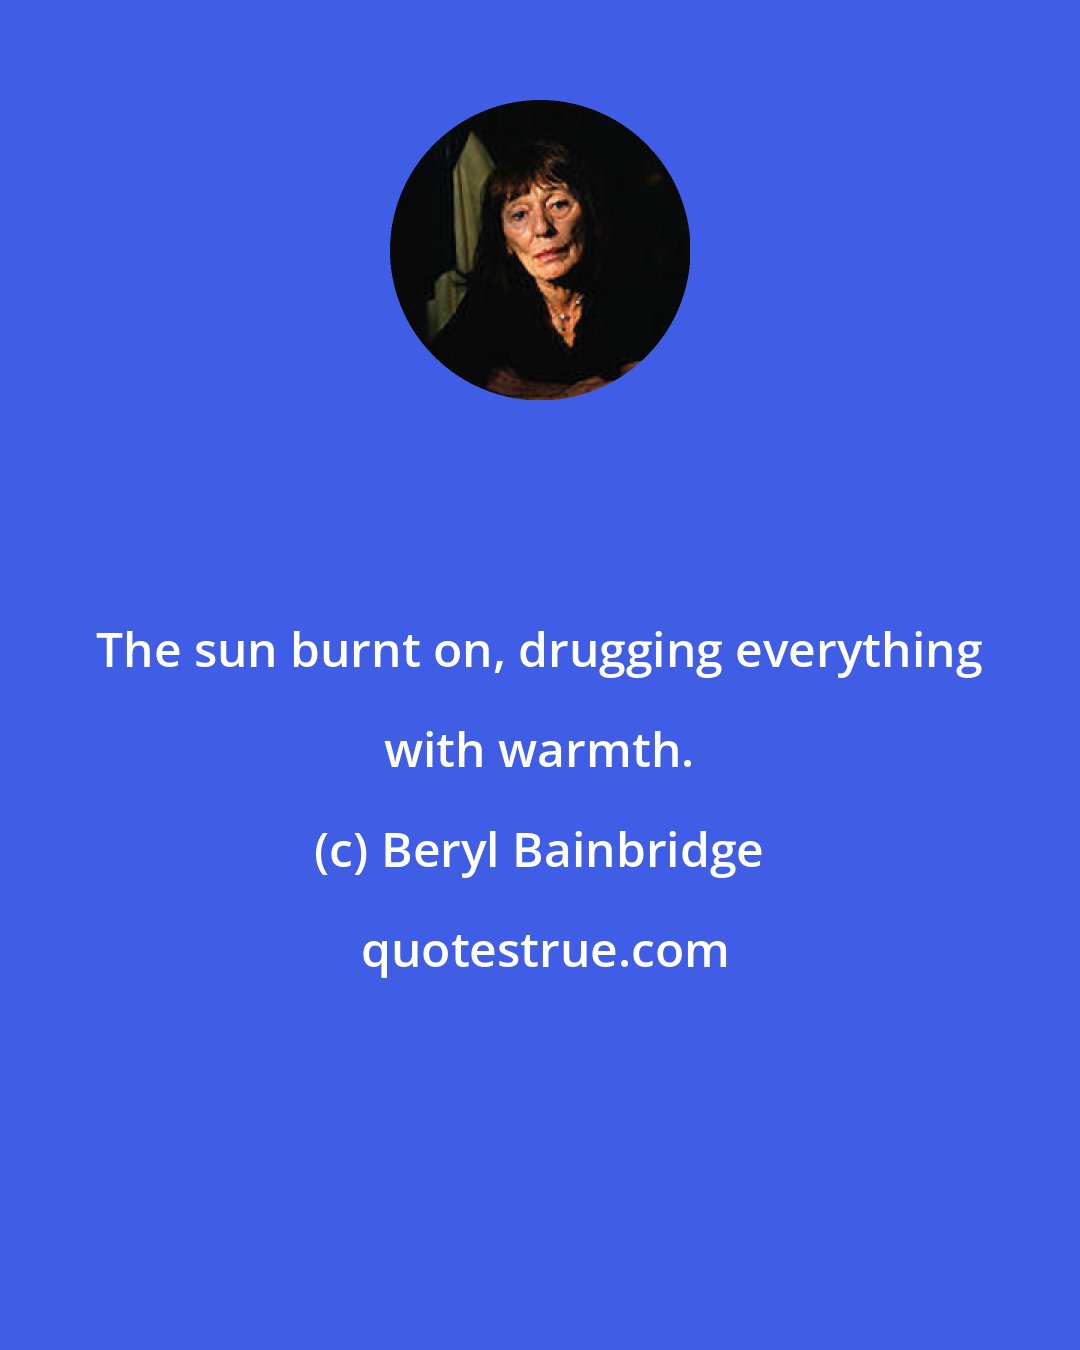 Beryl Bainbridge: The sun burnt on, drugging everything with warmth.